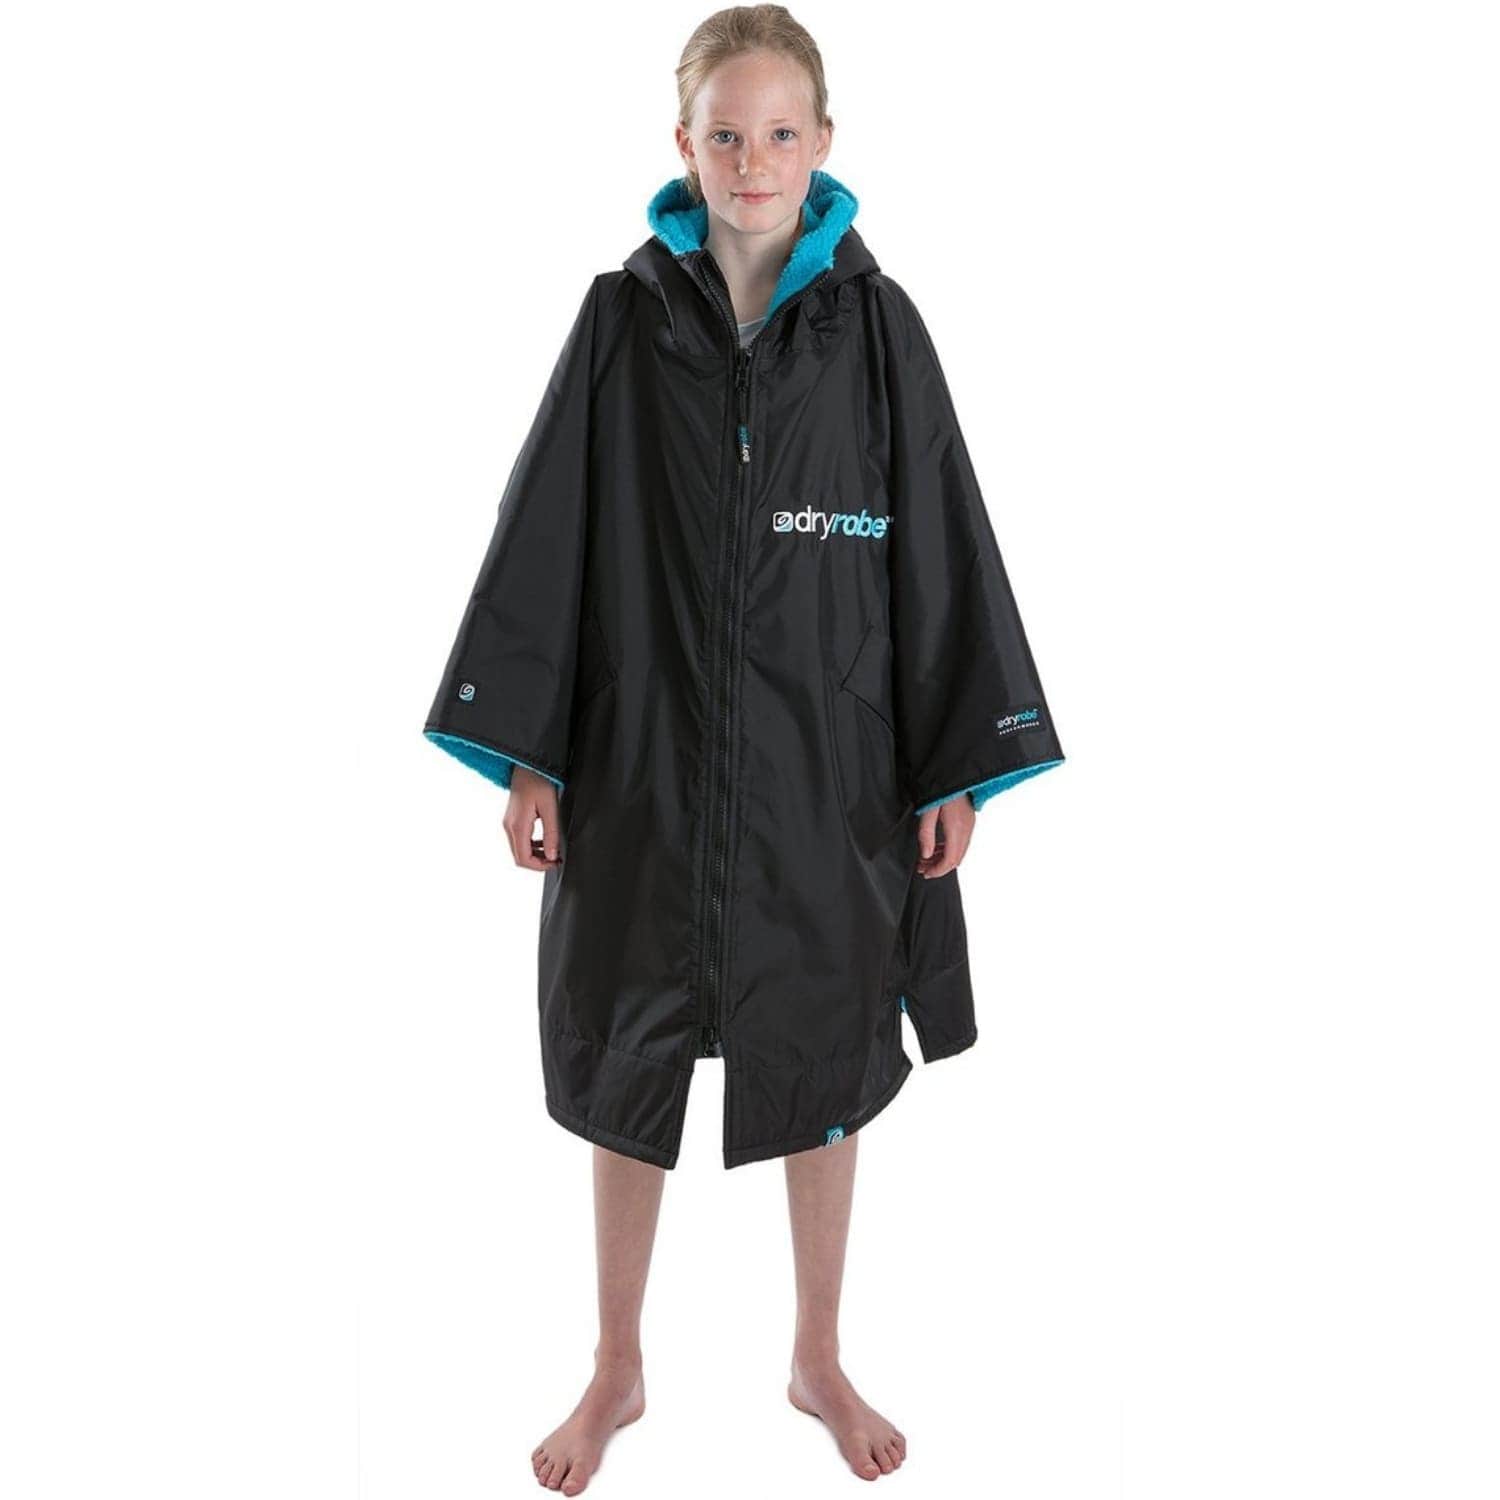 Dryrobe Advance Kids Short Sleeve Drying & Changing Robe - Black/Blue - Changing Robe Poncho Towel by Dryrobe